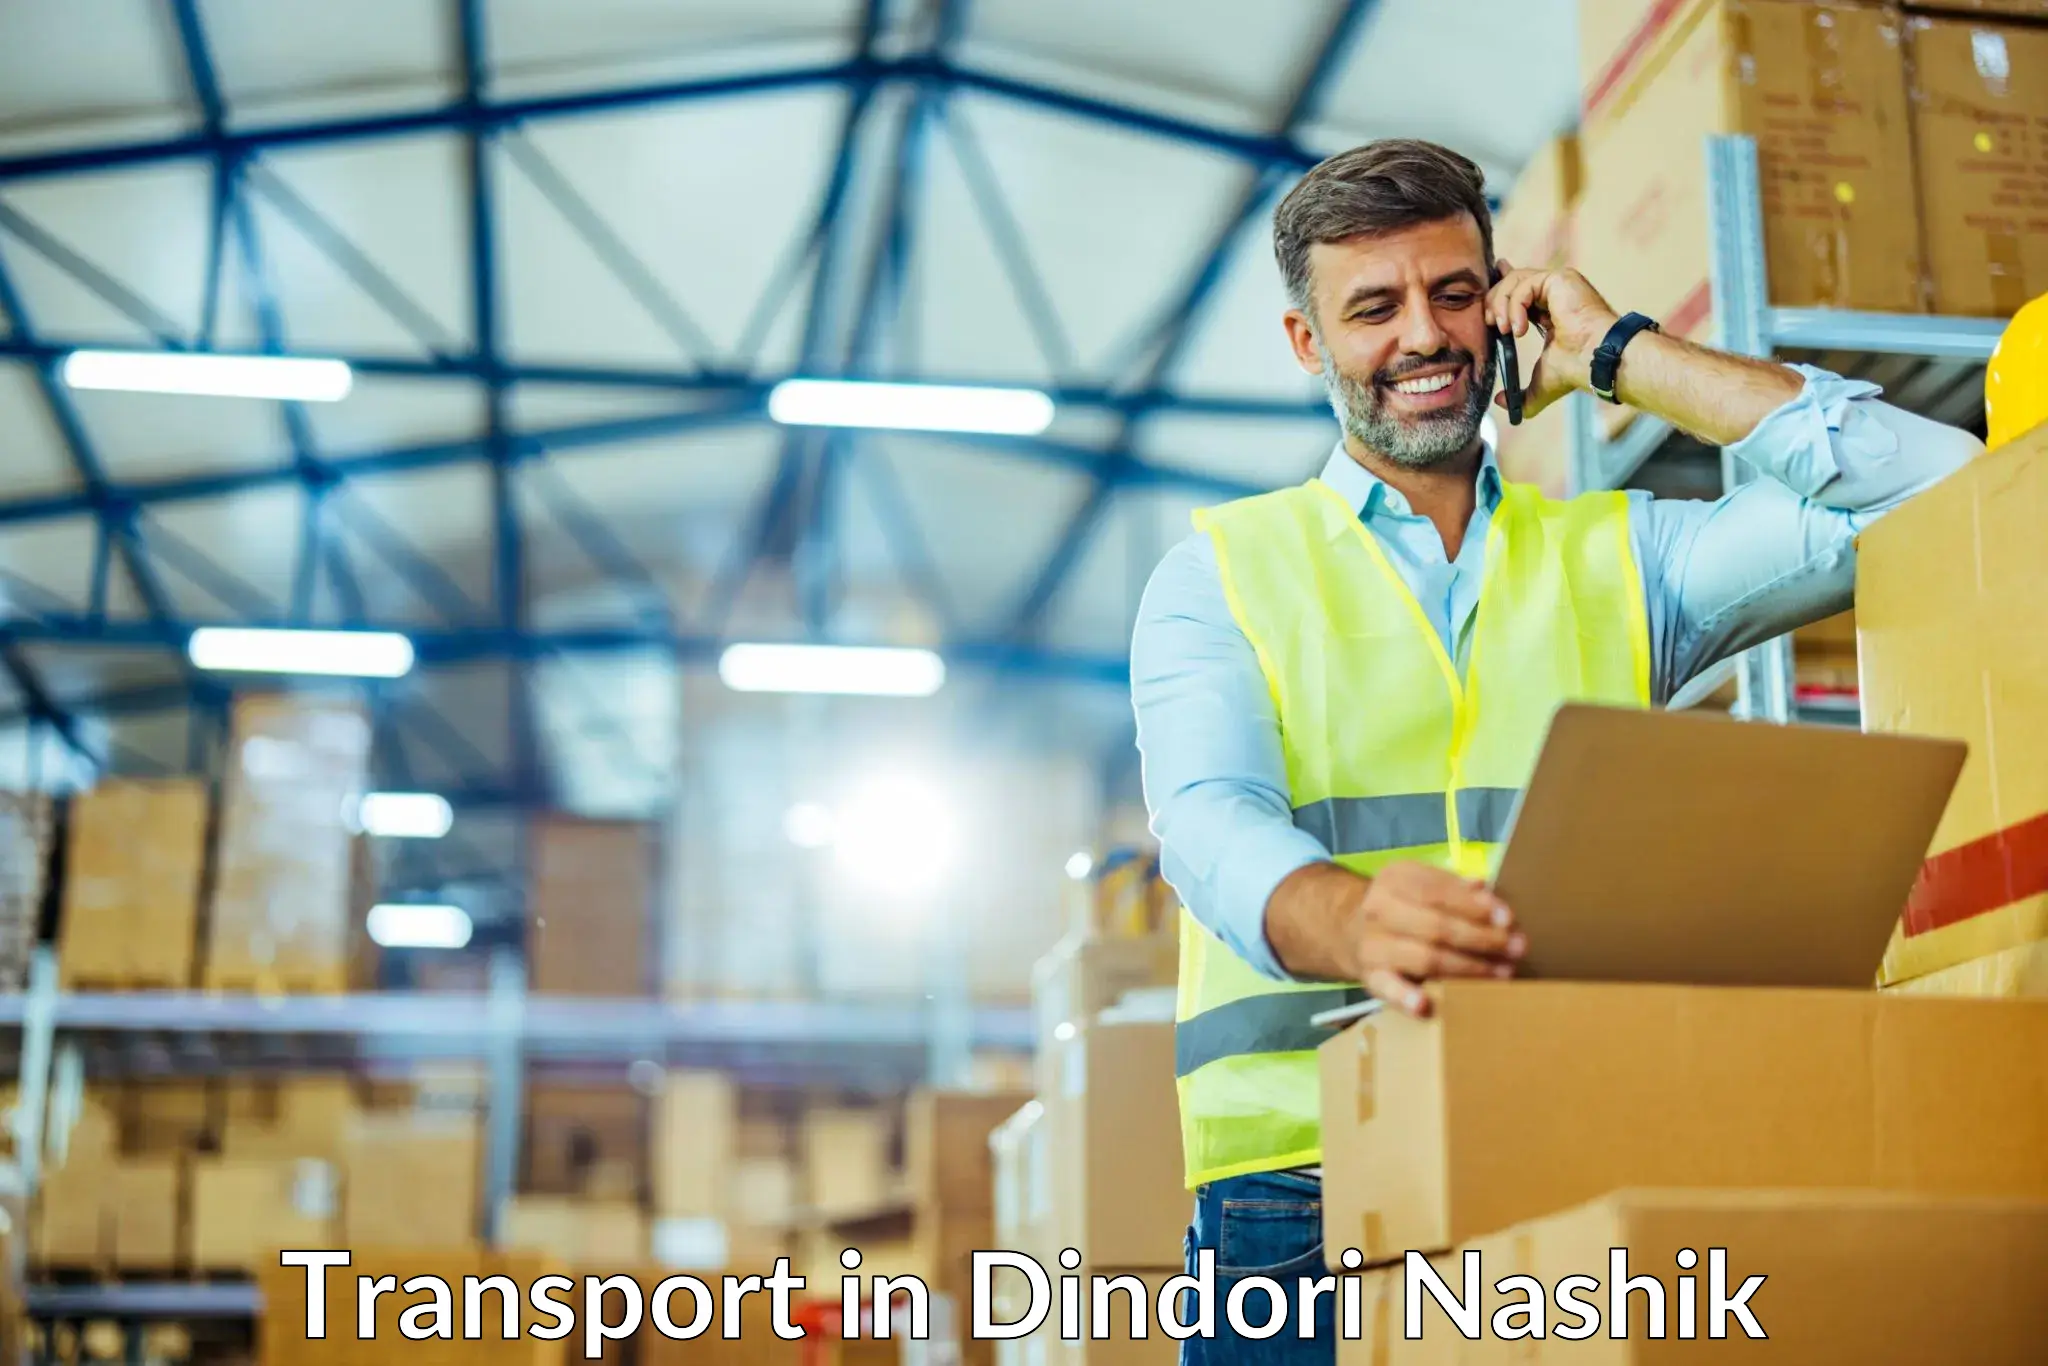 Air freight transport services in Dindori Nashik